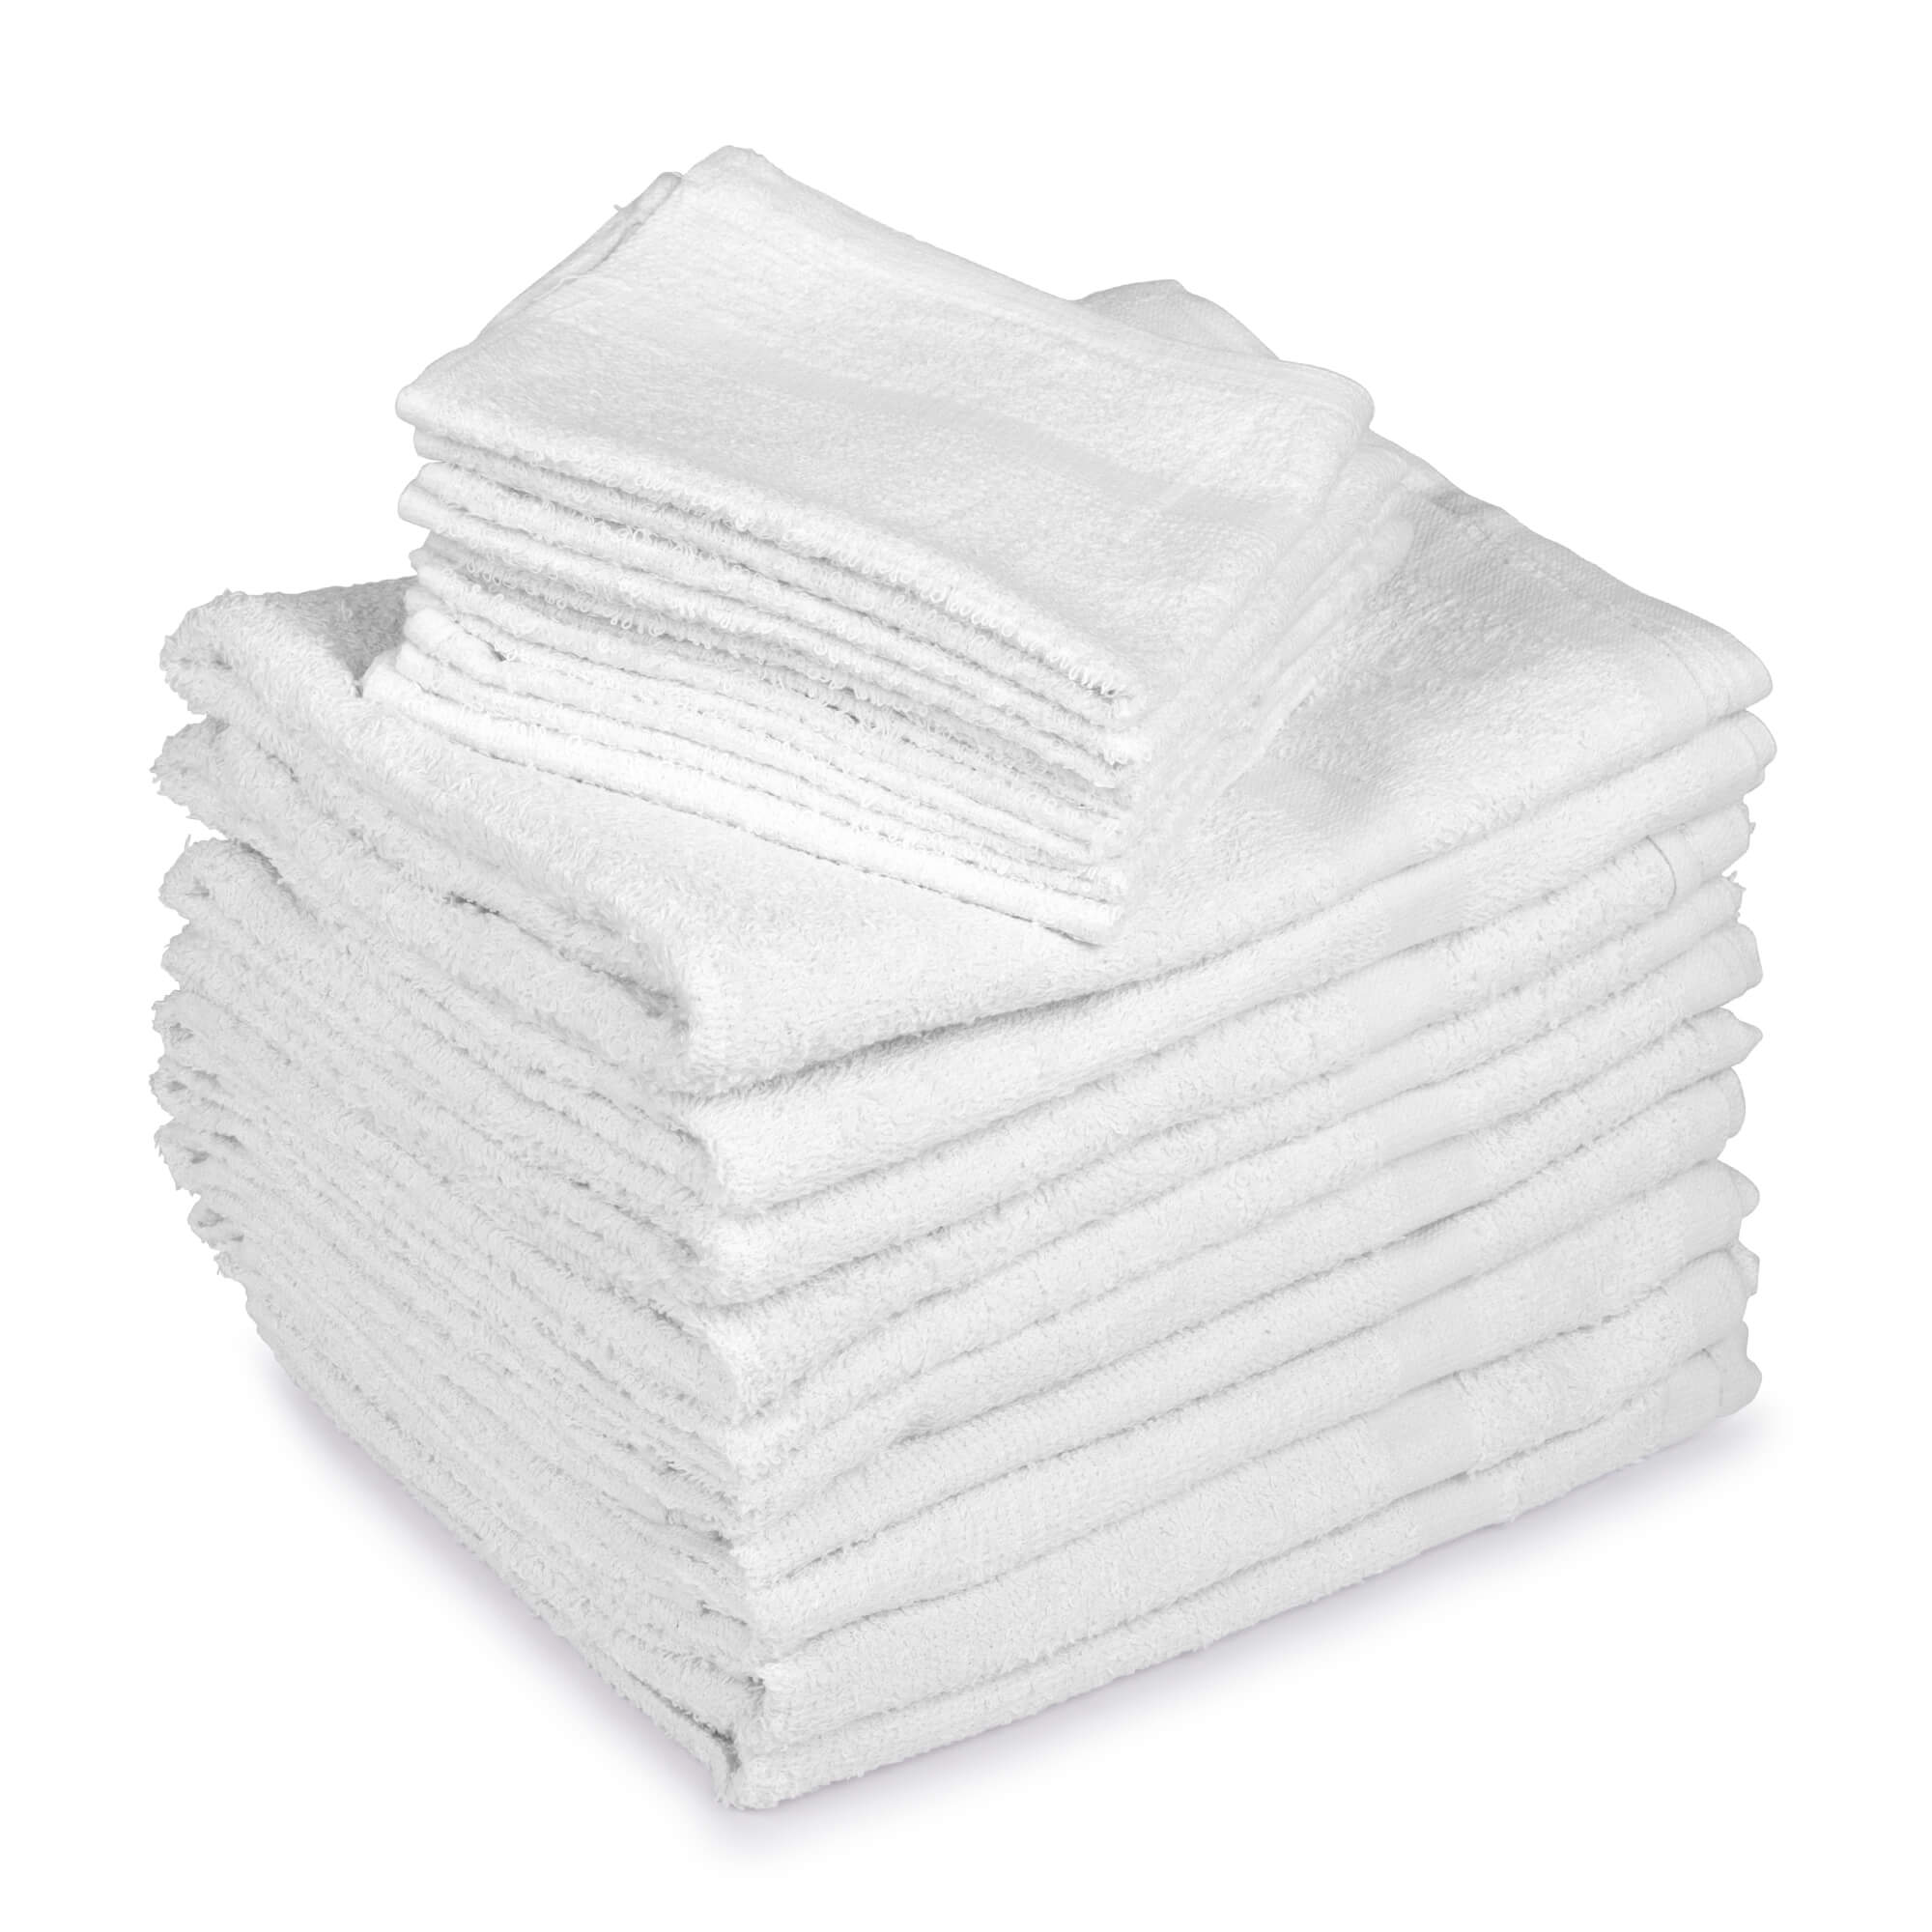 Hospital / VA Propery Bath Towels